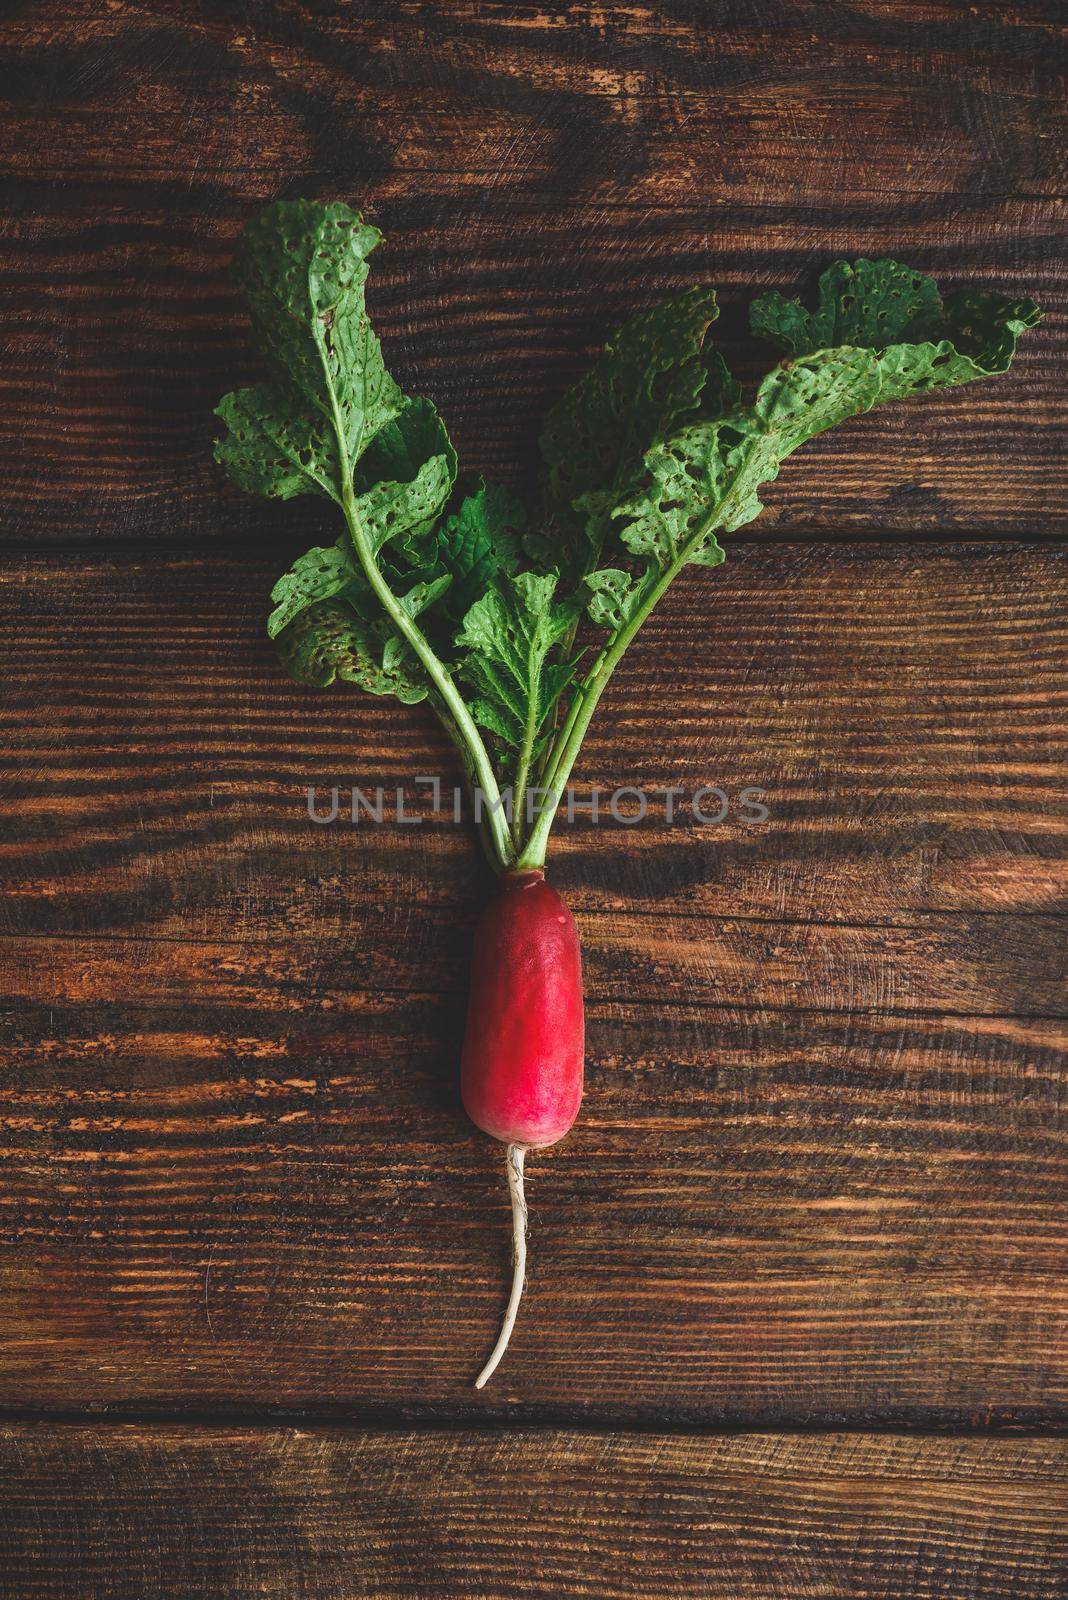 Homegrown red radish by Seva_blsv